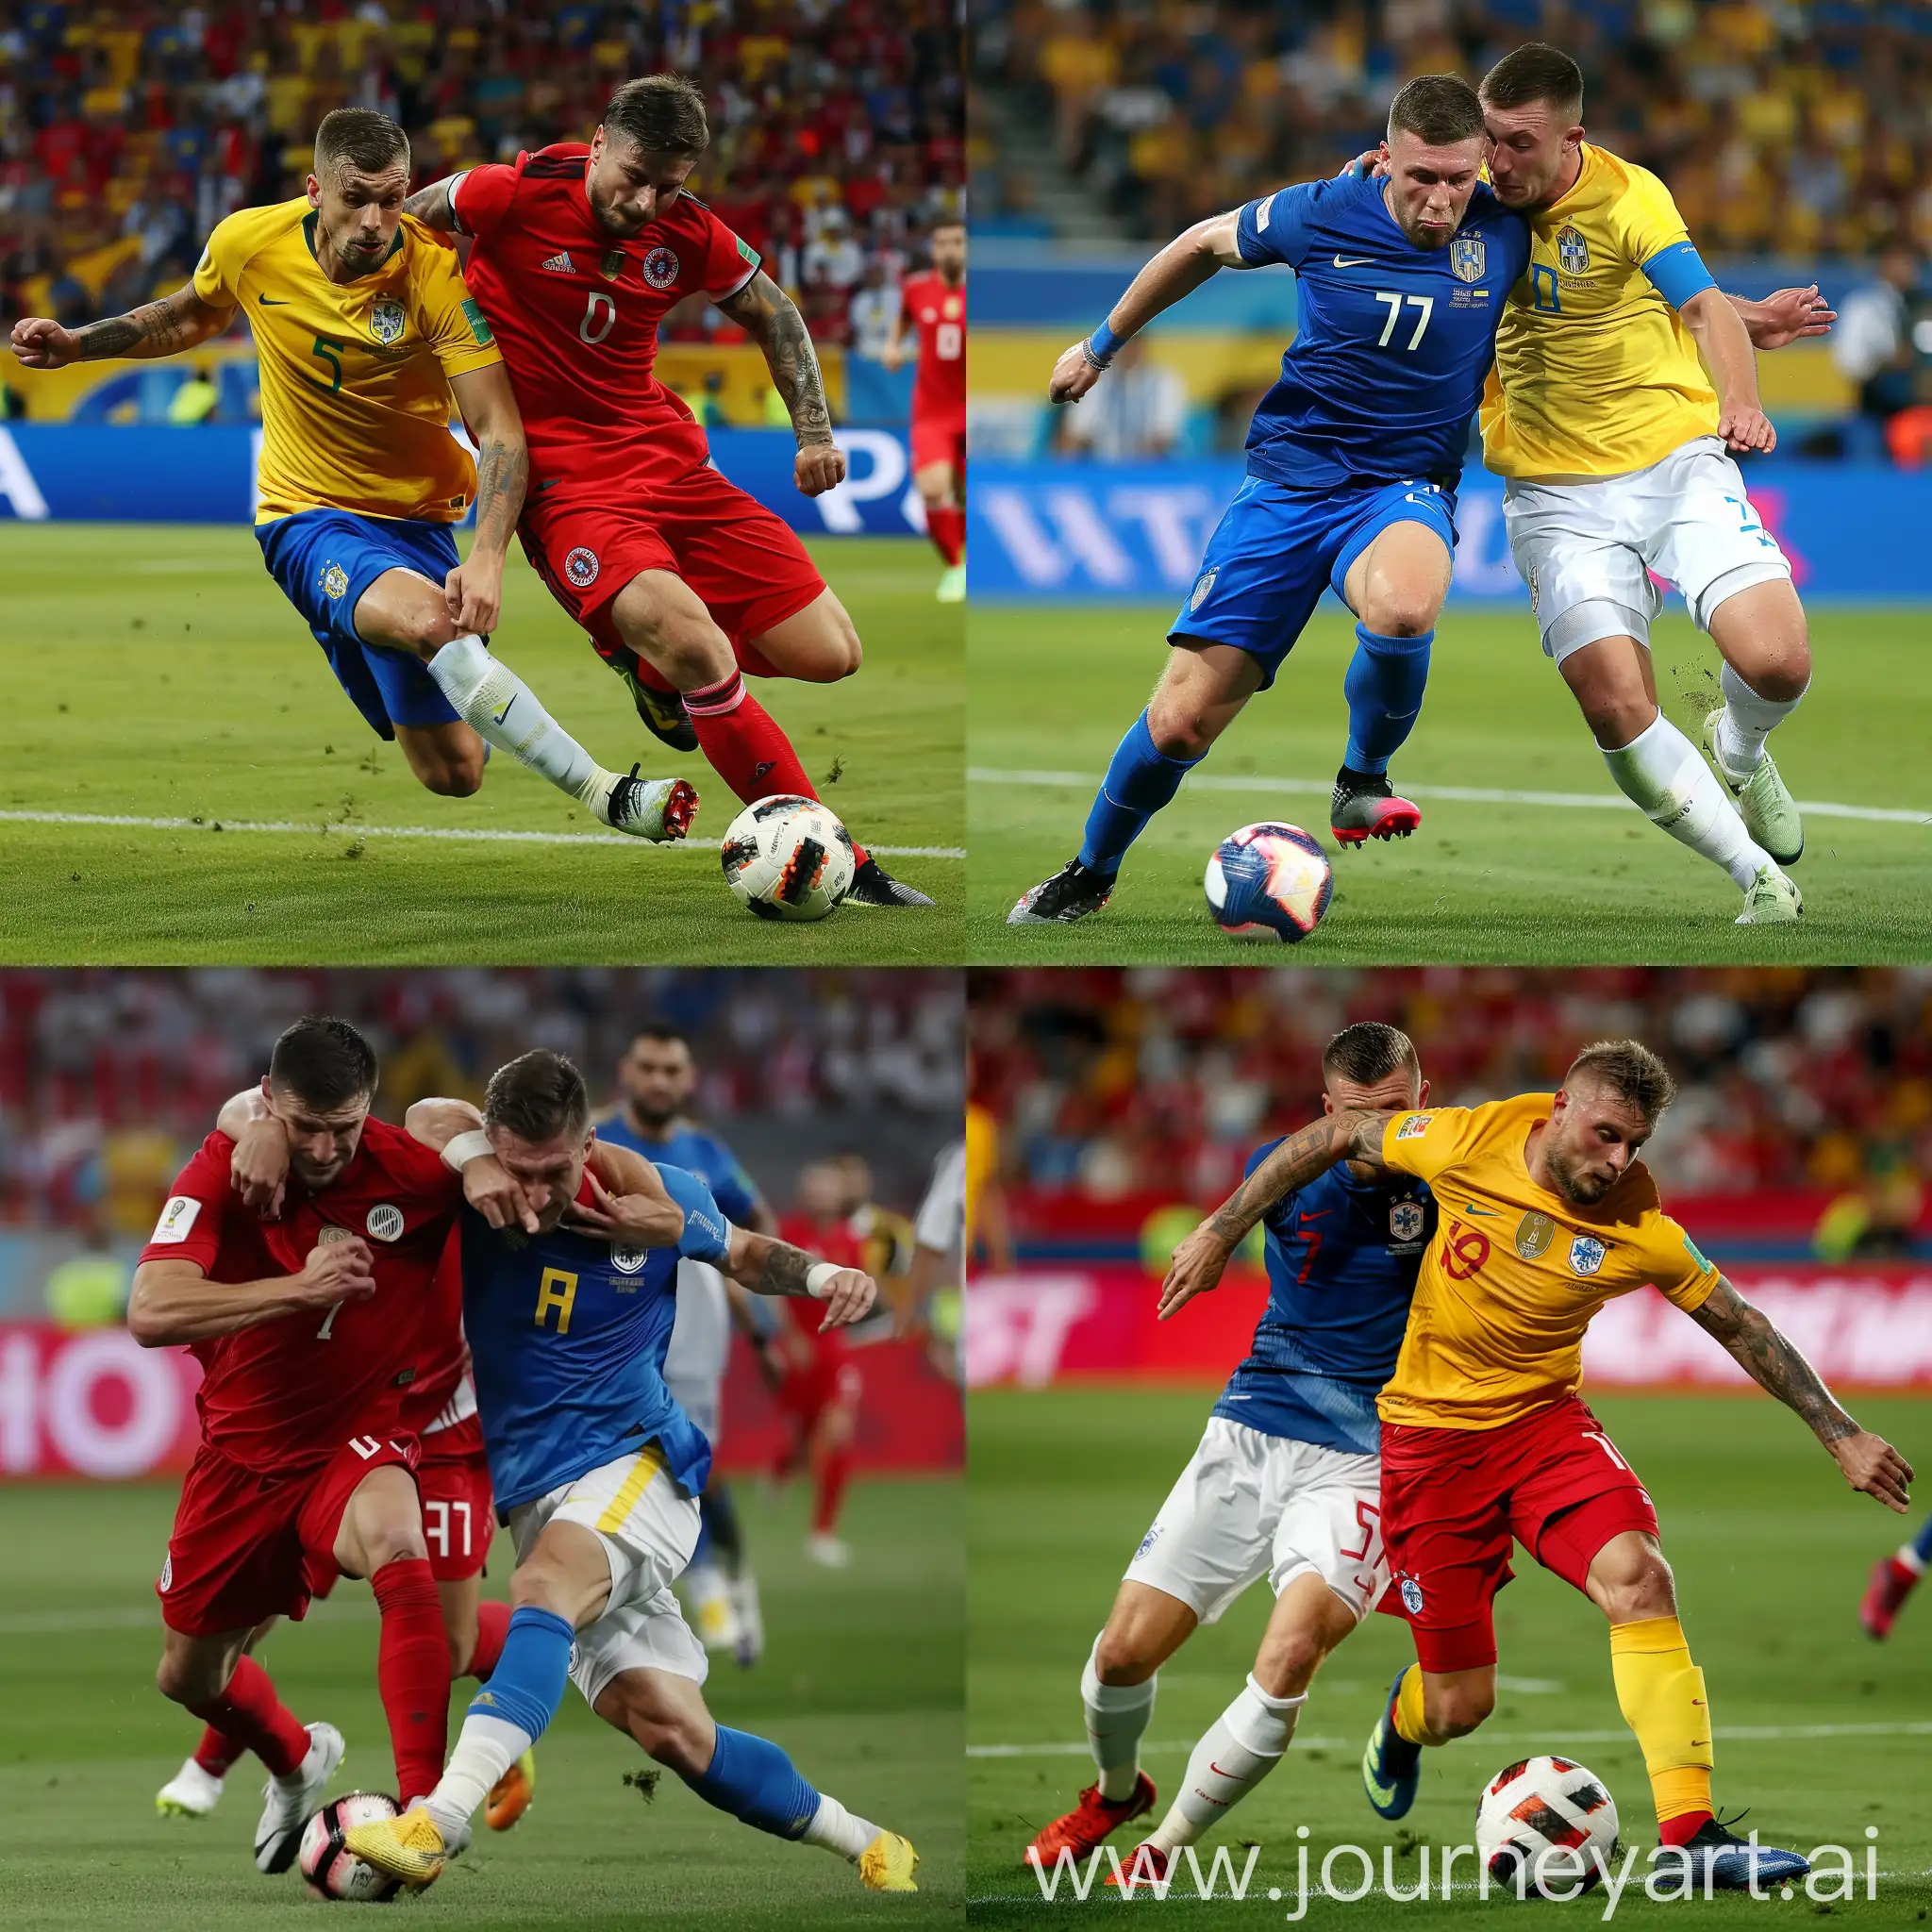 Intense-Soccer-Match-Poland-vs-Ukraine-Clash-on-the-Pitch